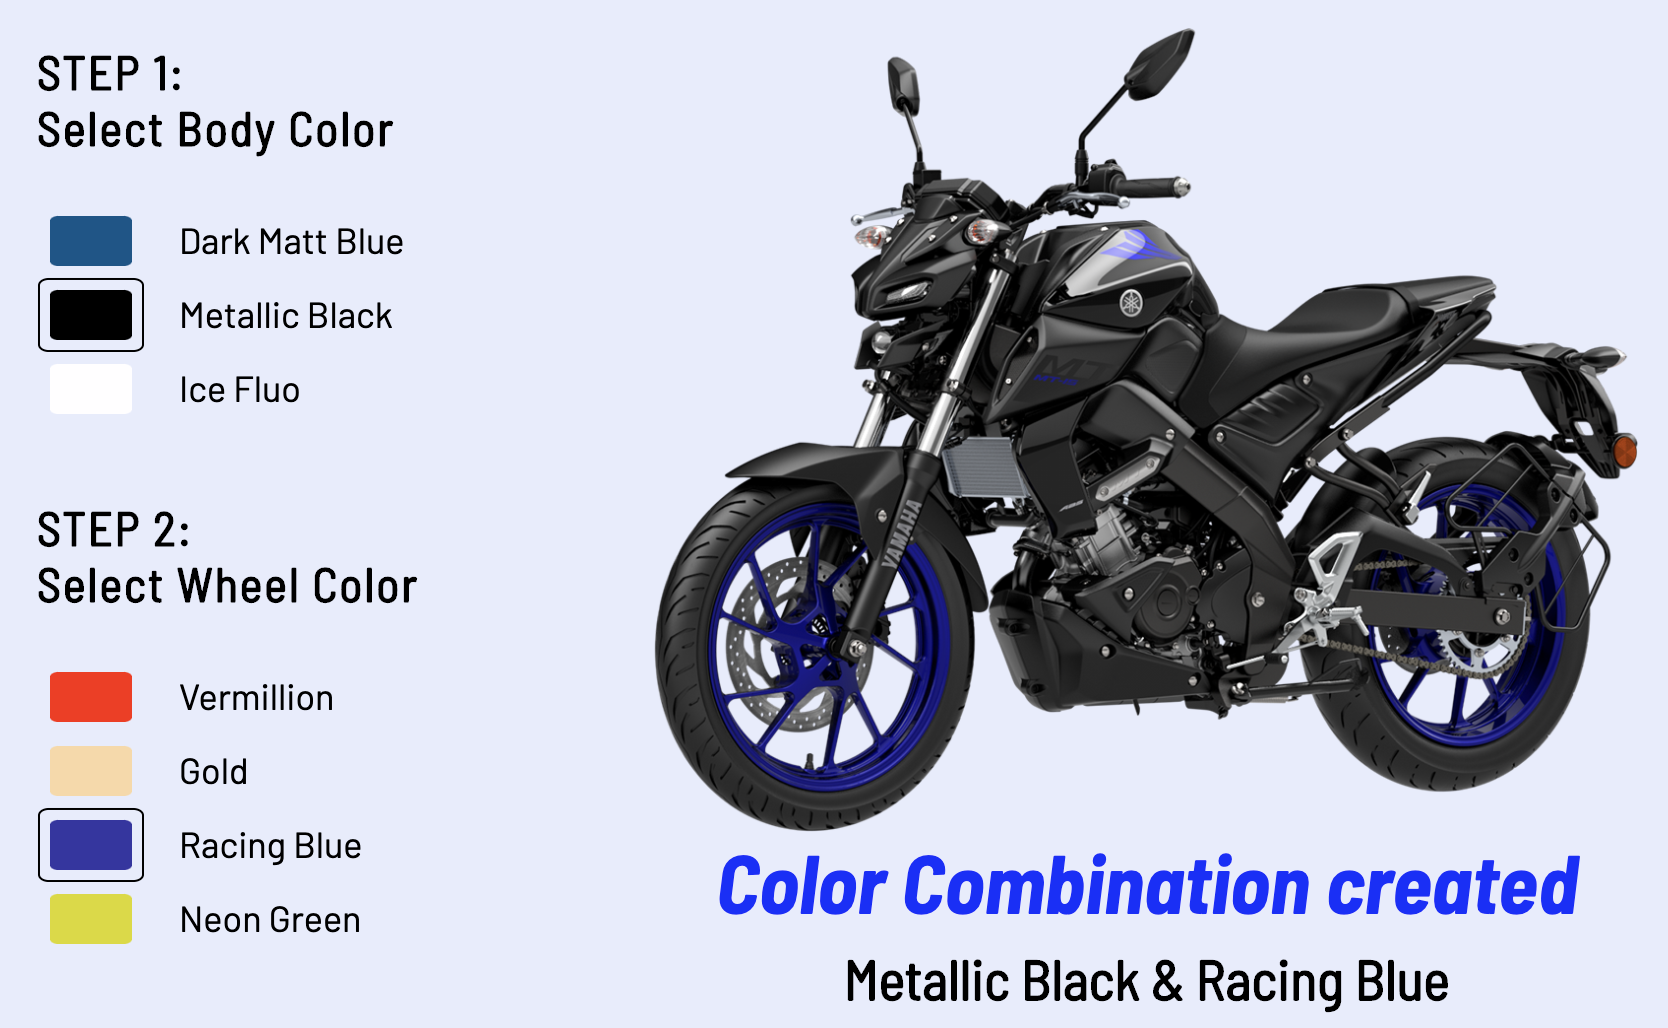 Metallic Black and Racing Blue